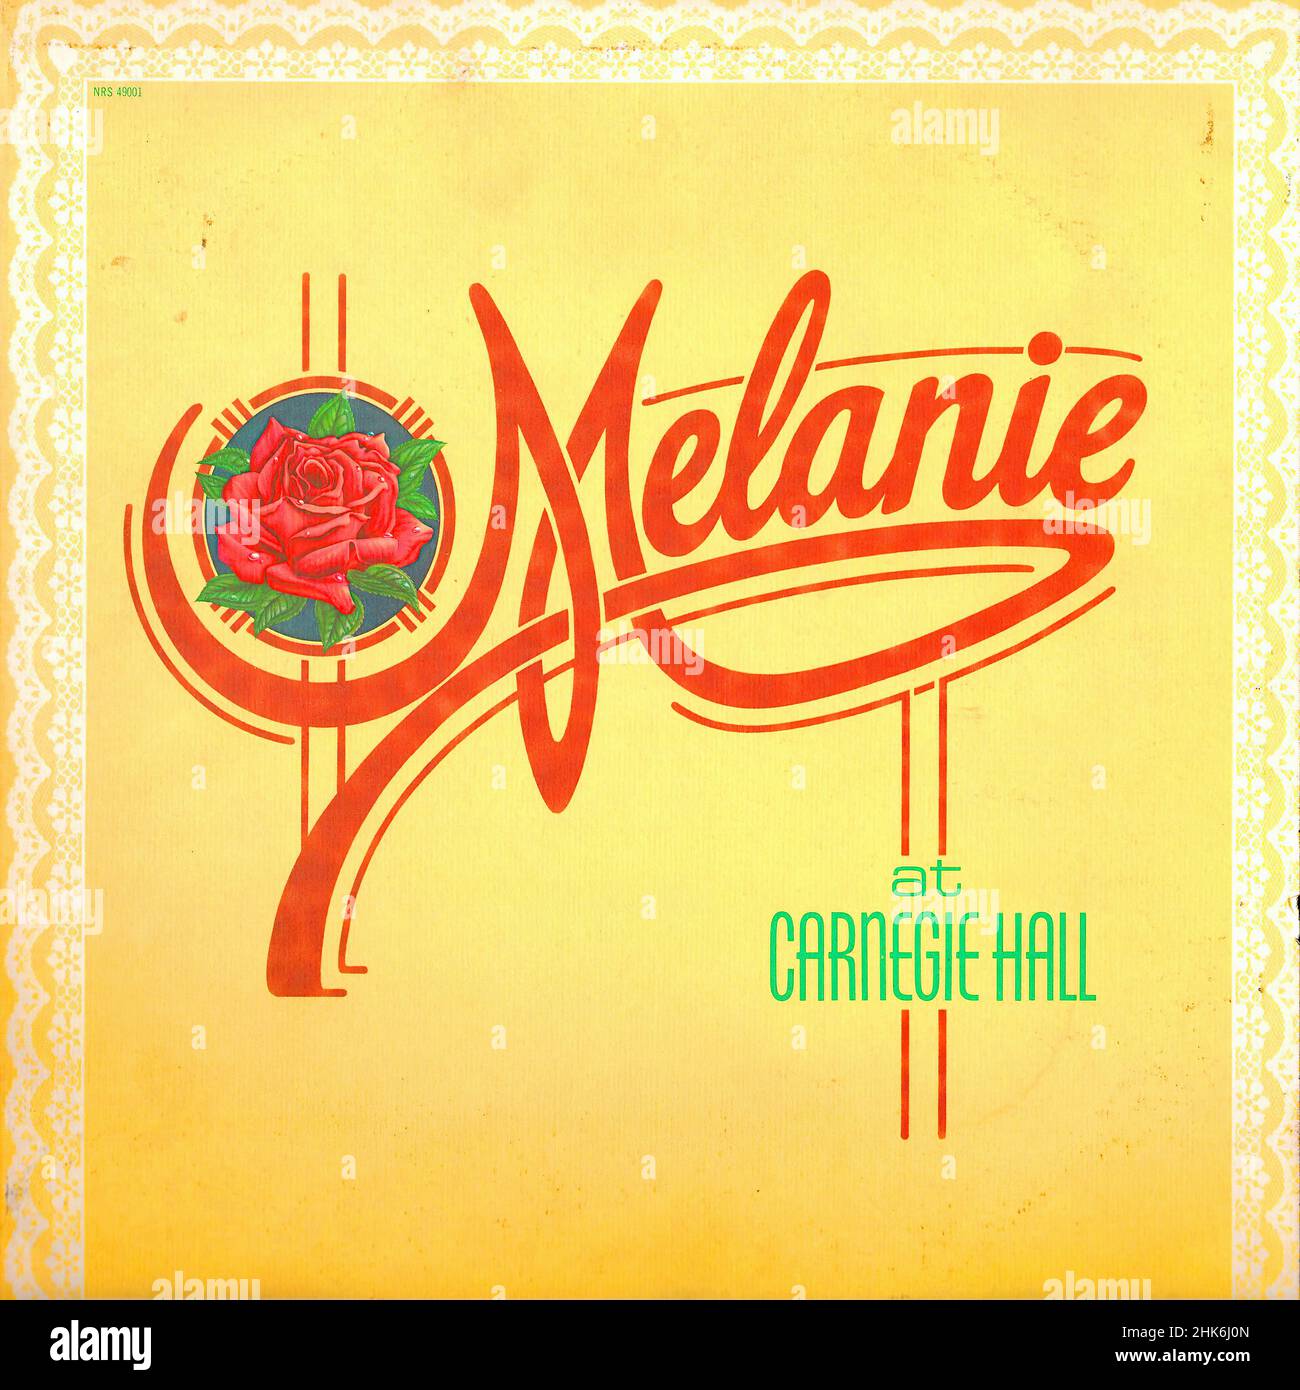 Vintage vinyl record cover - Melanie - At Carnegie Hall - US - 1973 Stock Photo